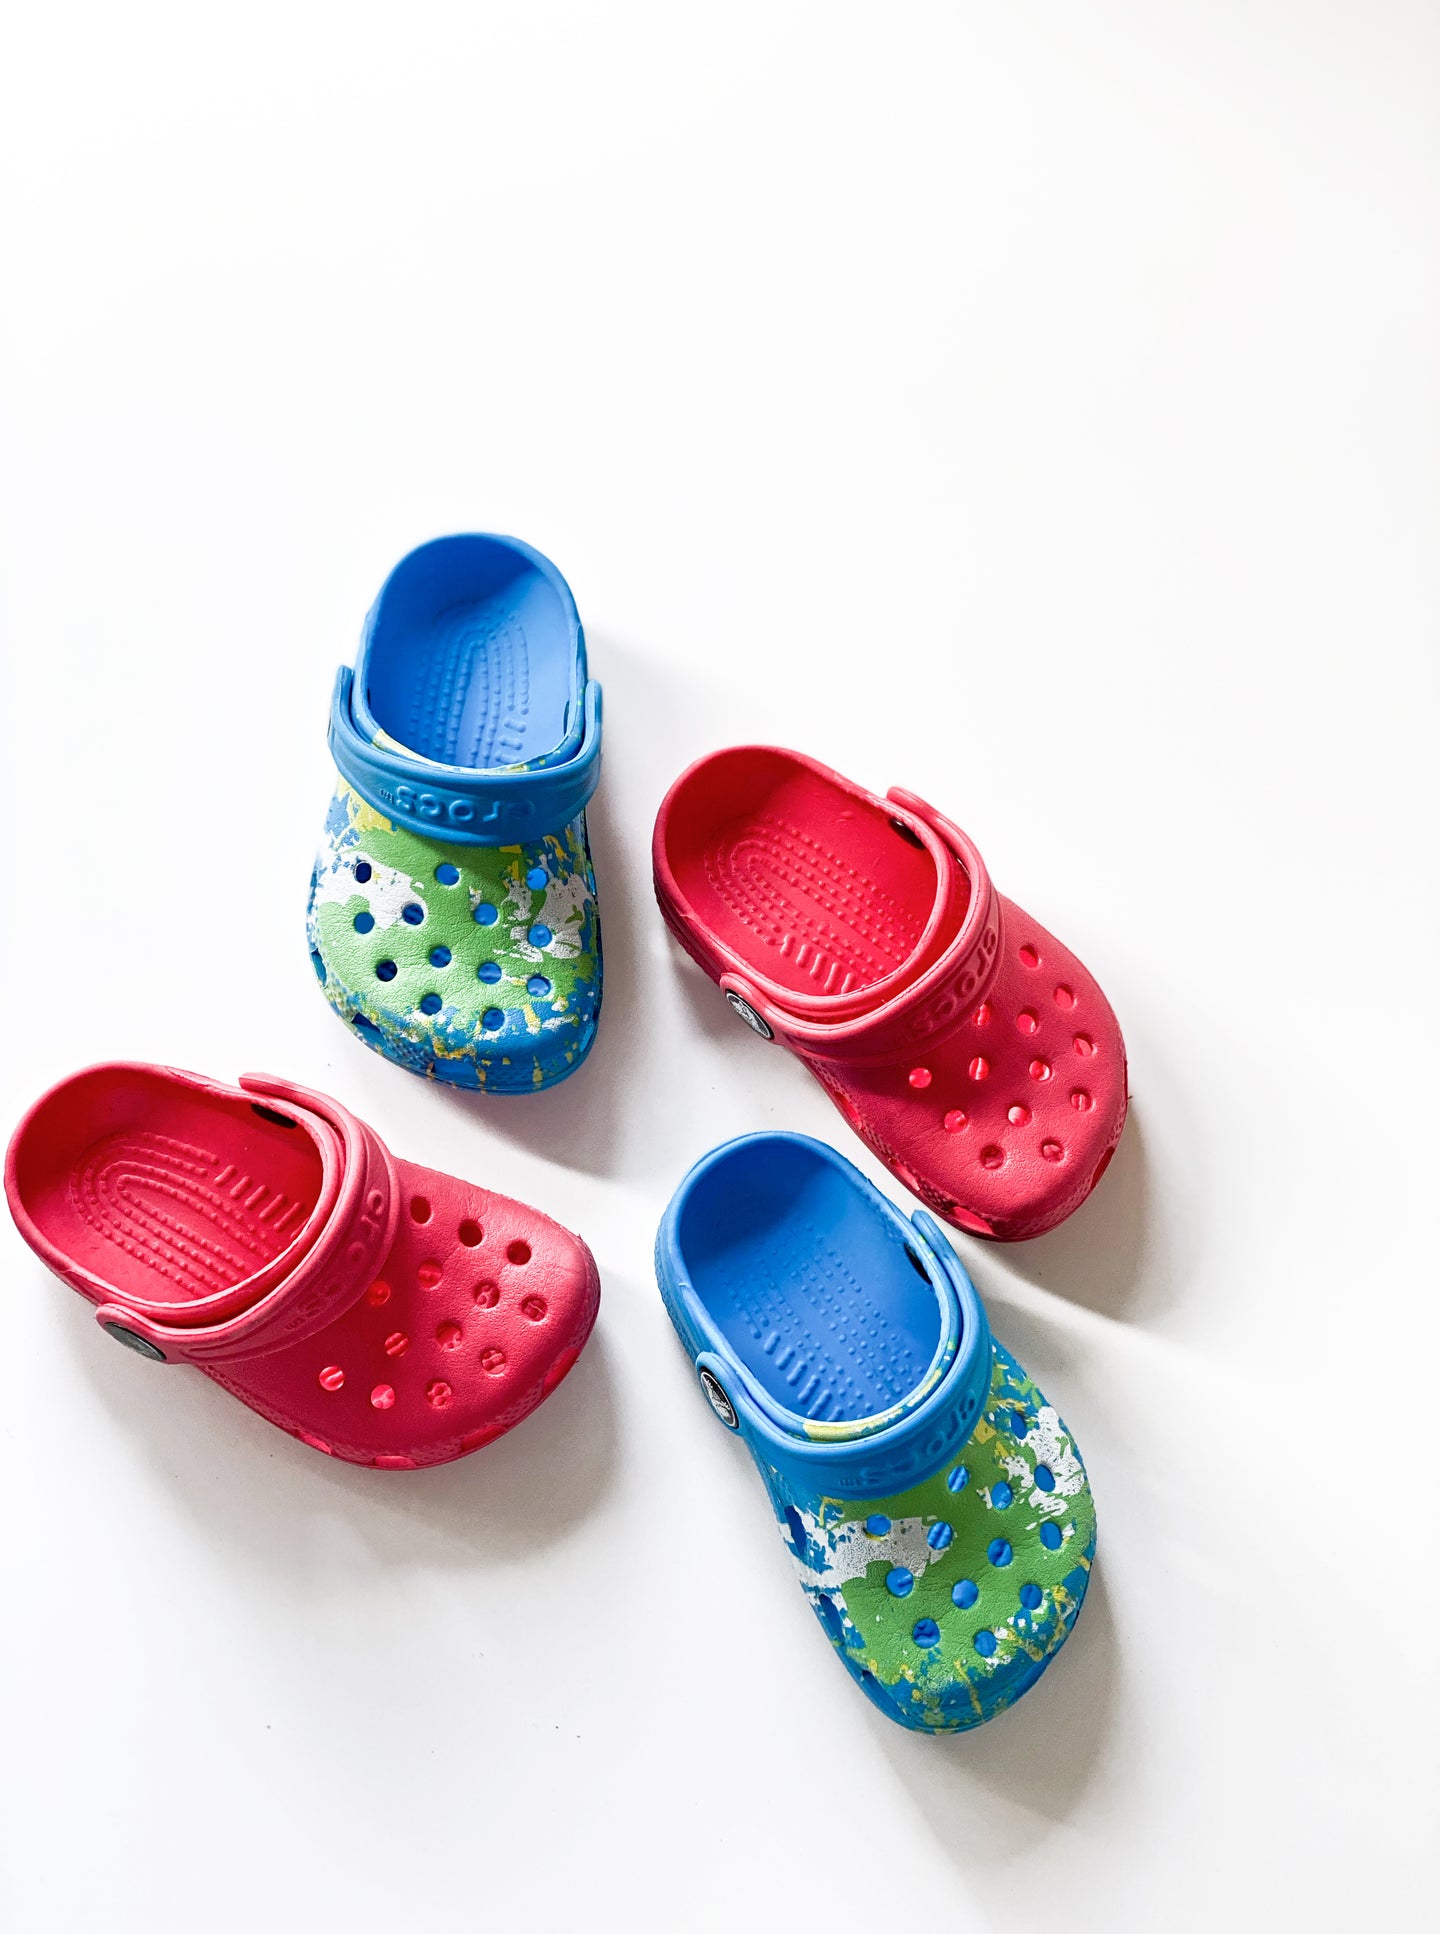 [US4] Crocs Sandals in Pink or Blue